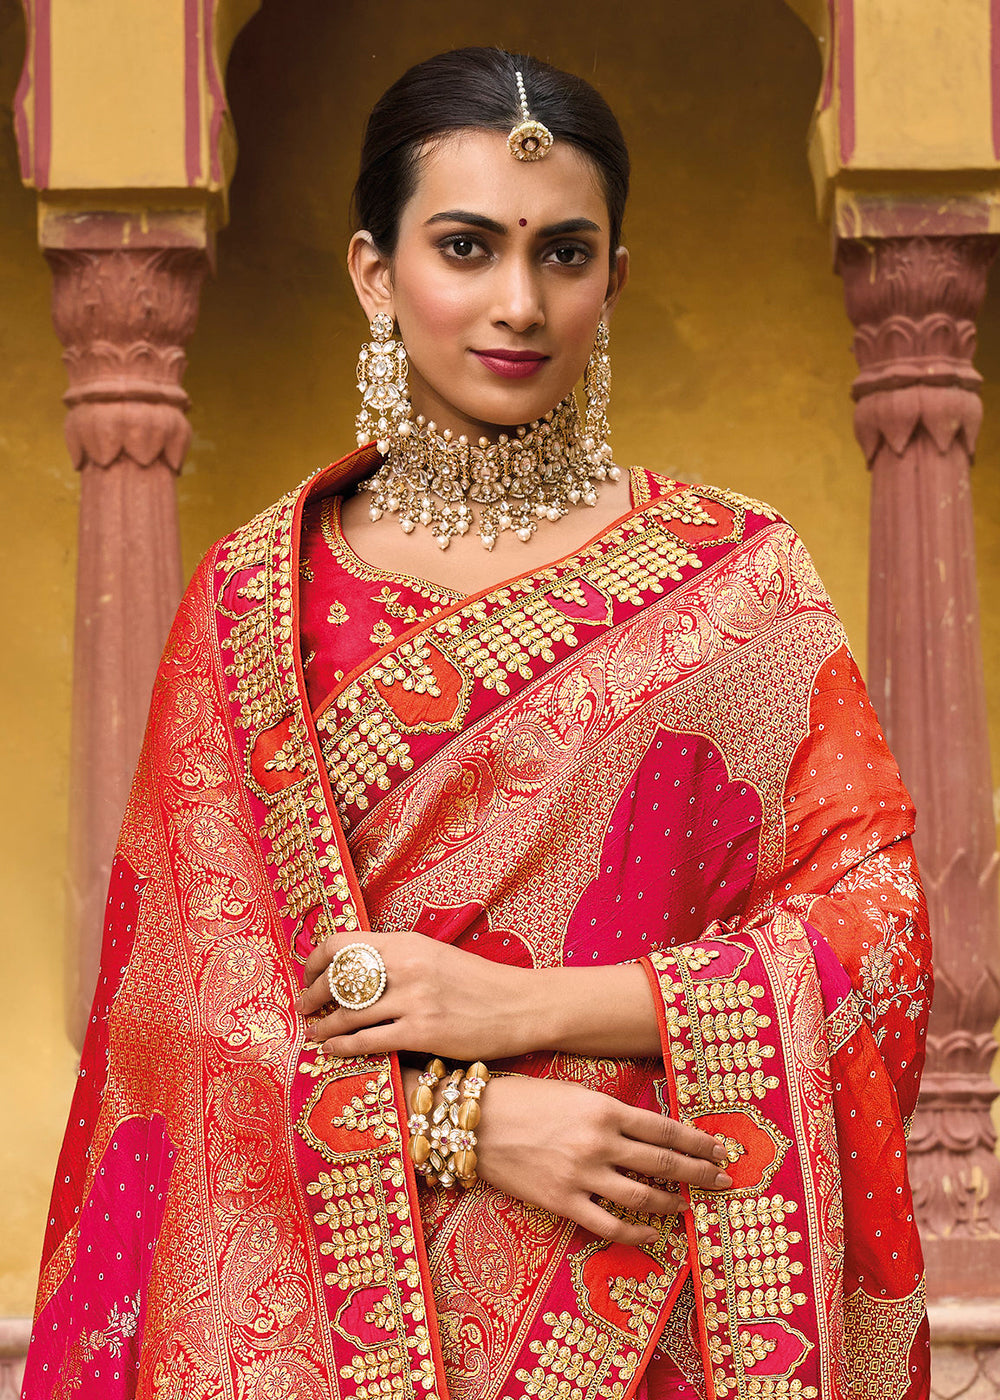 Buy Now Designer Multicolor Orange & Pink Silk Wedding Wear Saree Online in USA, UK, Canada & Worldwide at Empress Clothing. 